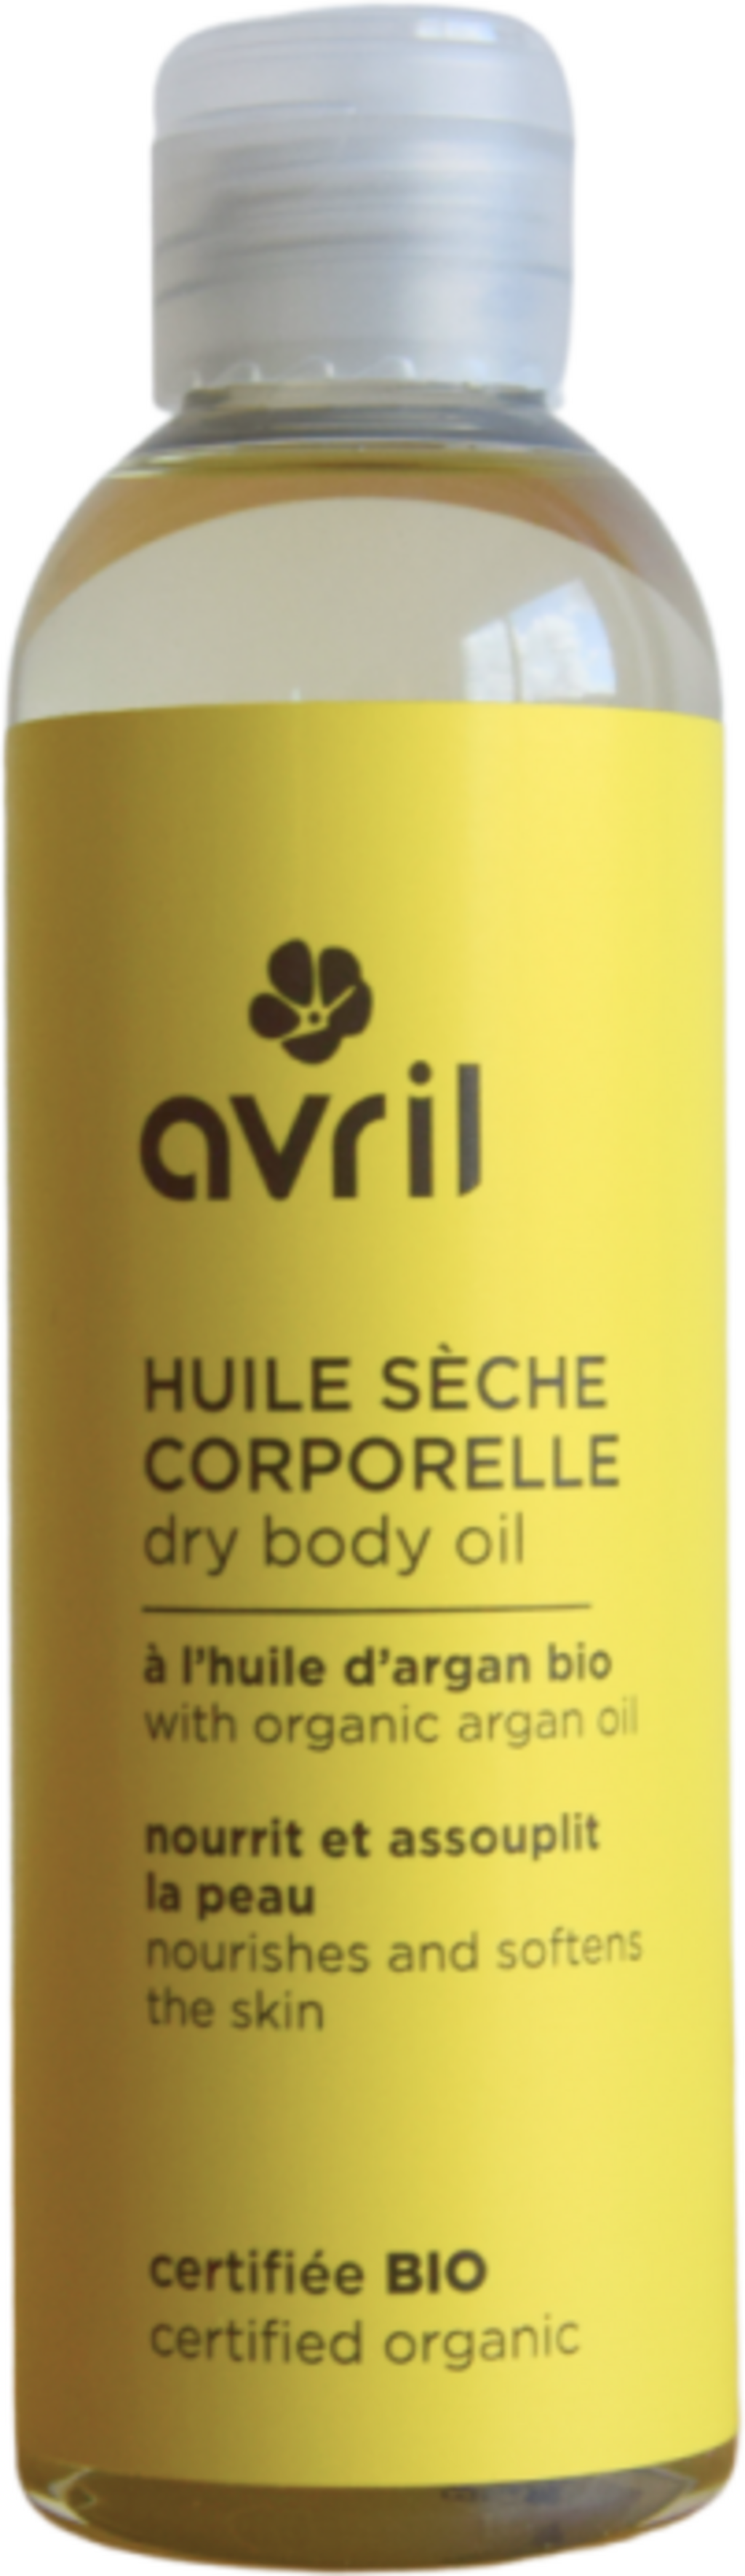 Avril dry body oil